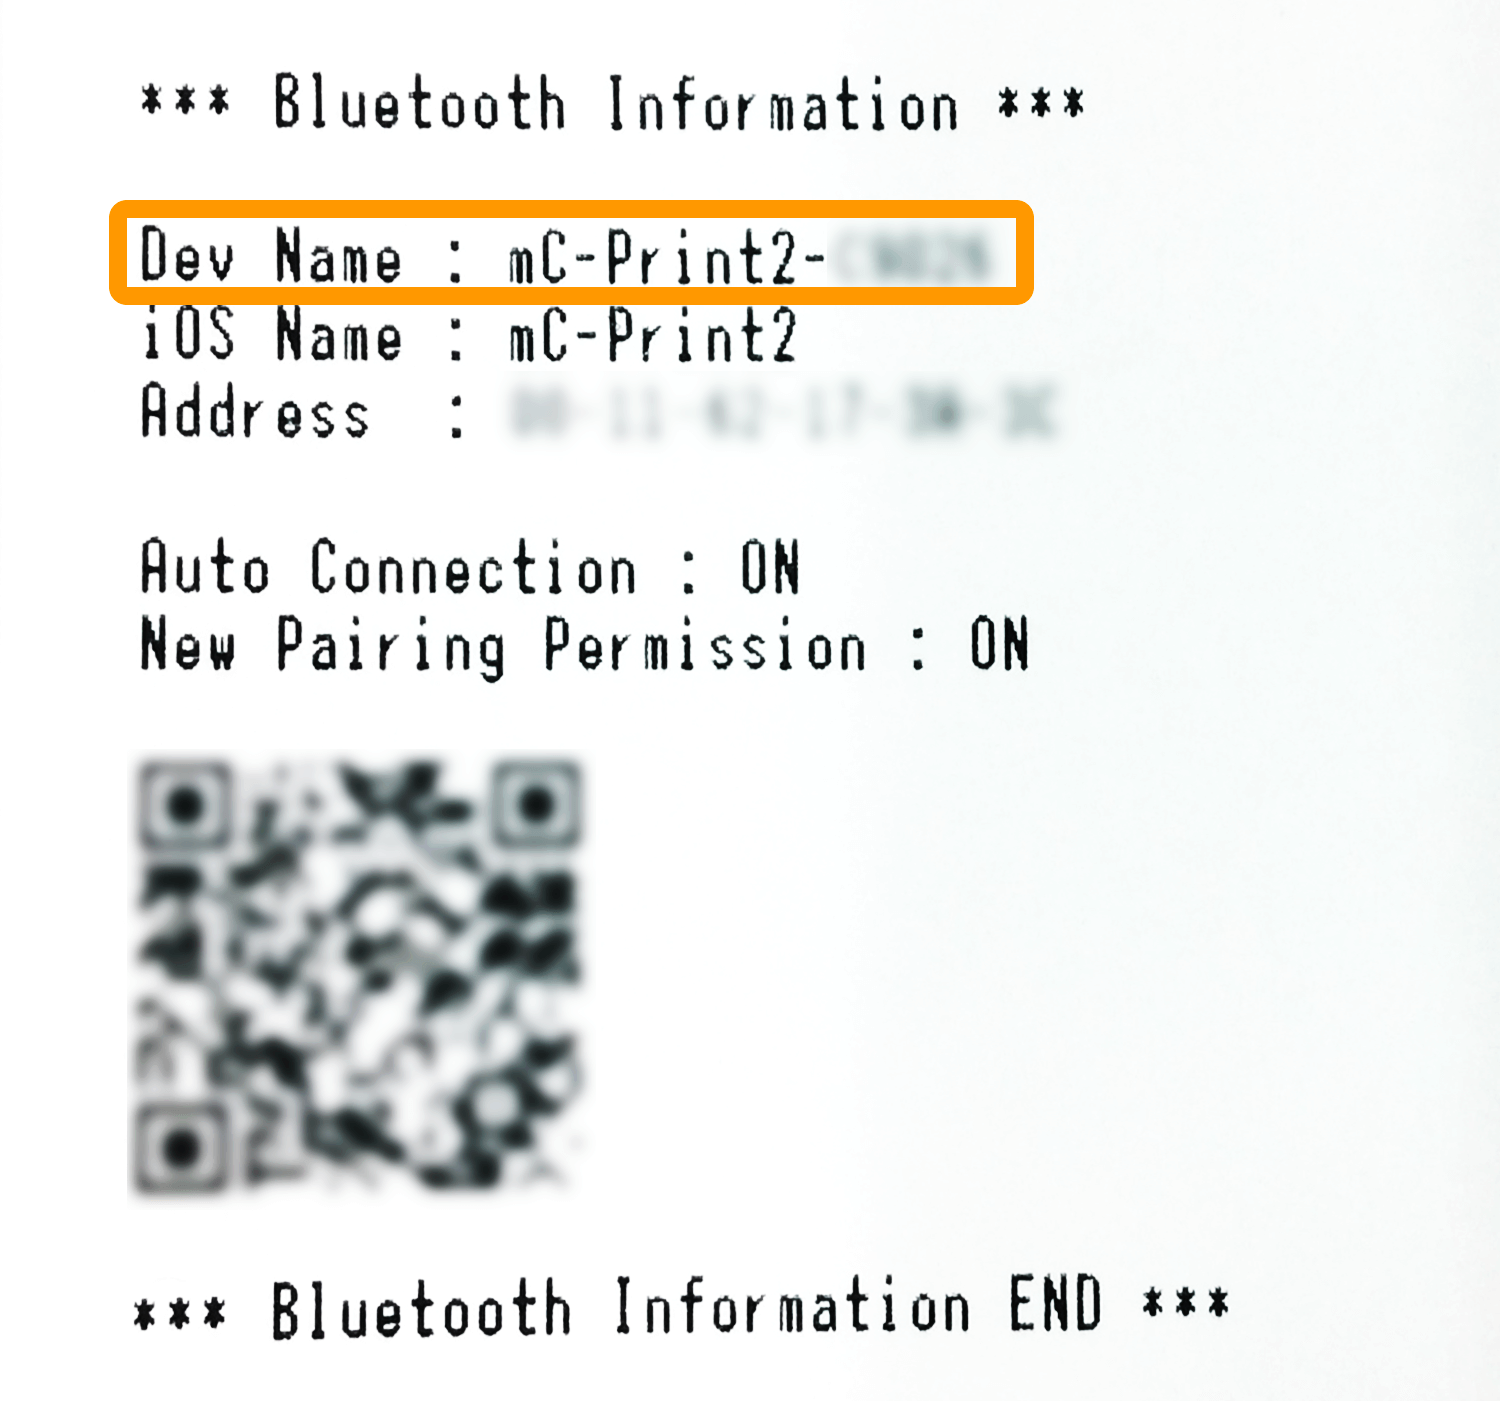 mC-Print2プリンター Bluetooth Information 印字内容